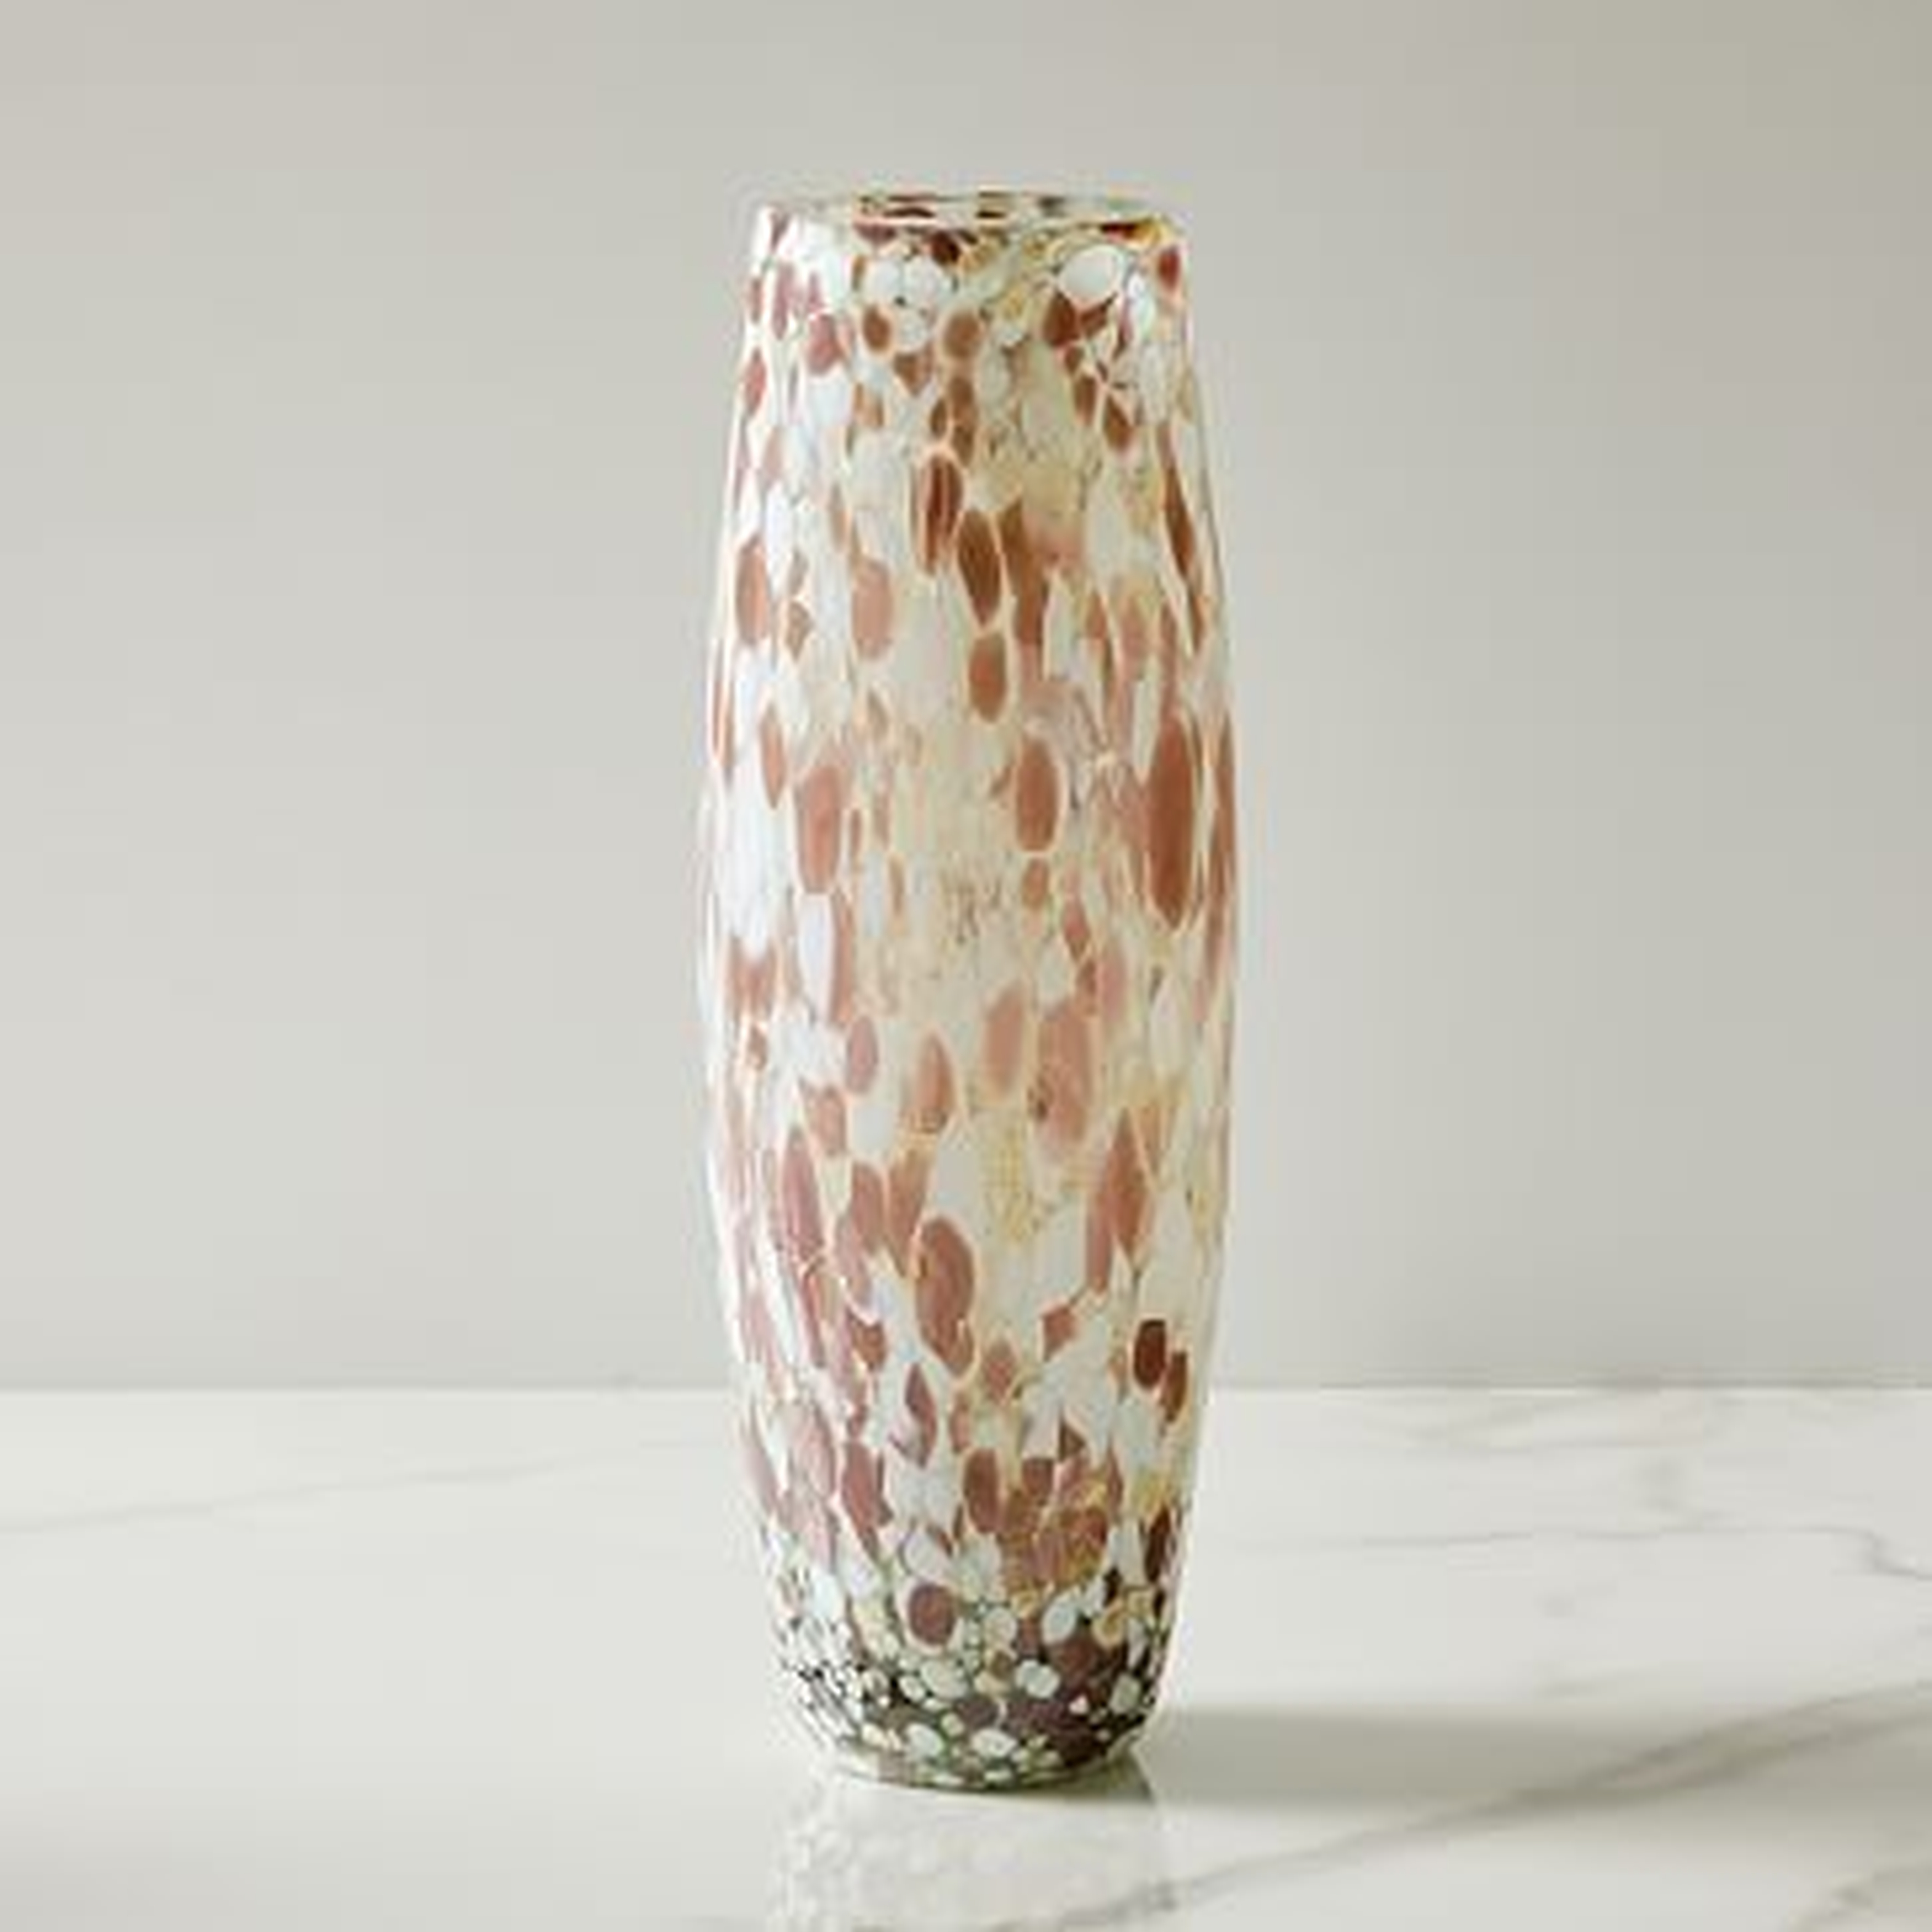 Speckled Mexican Glass Vase, Mauve/White - West Elm